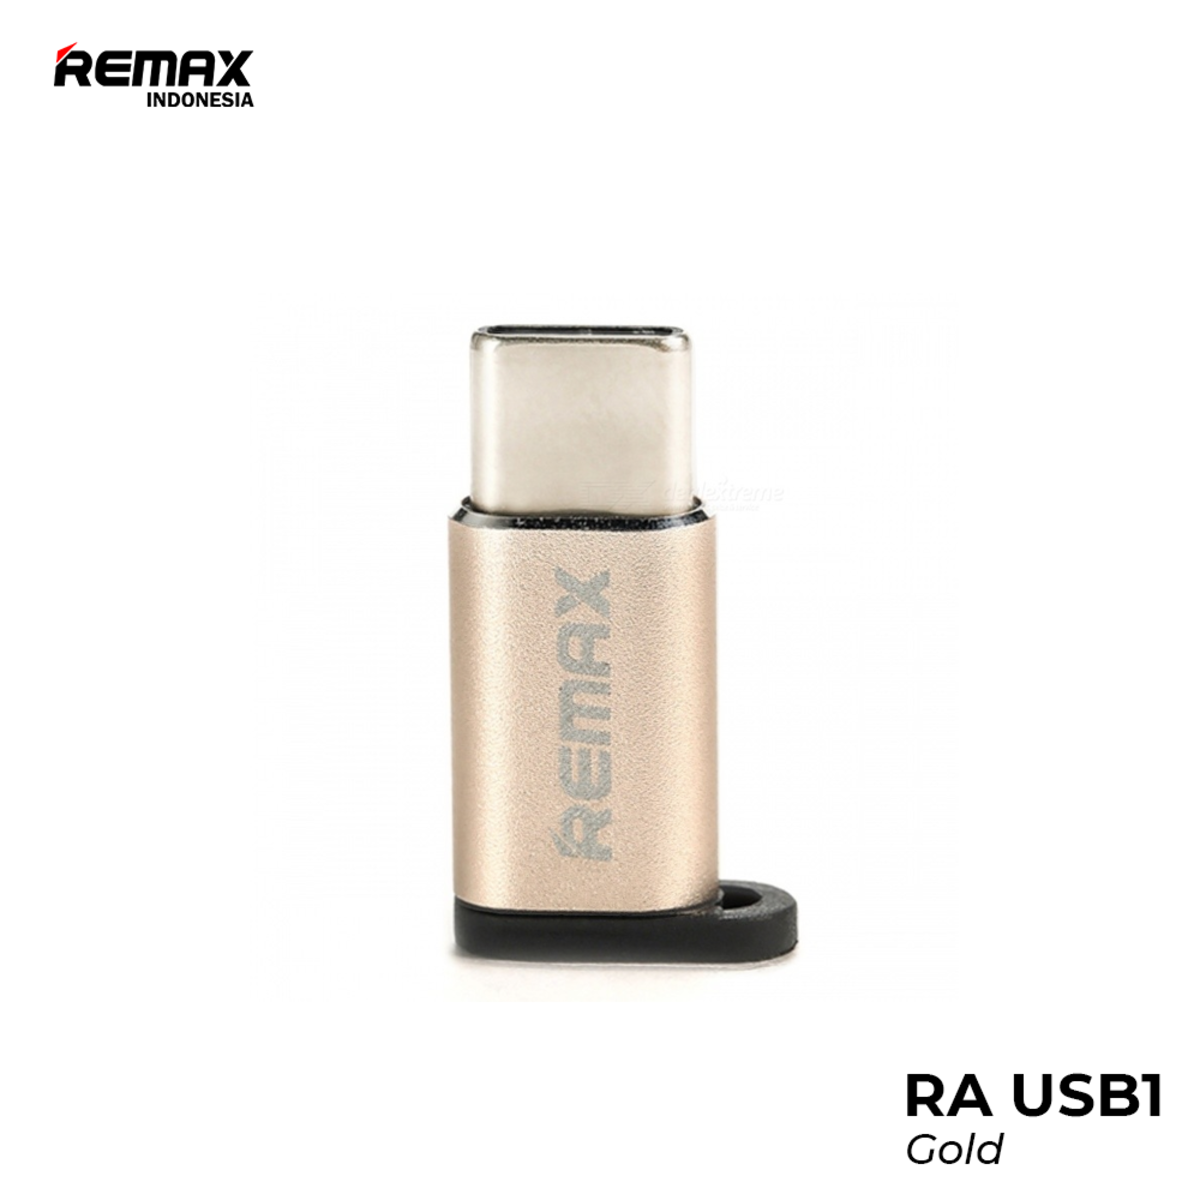 Remax OTG MicUSB-TypC RAUSB1 Gld